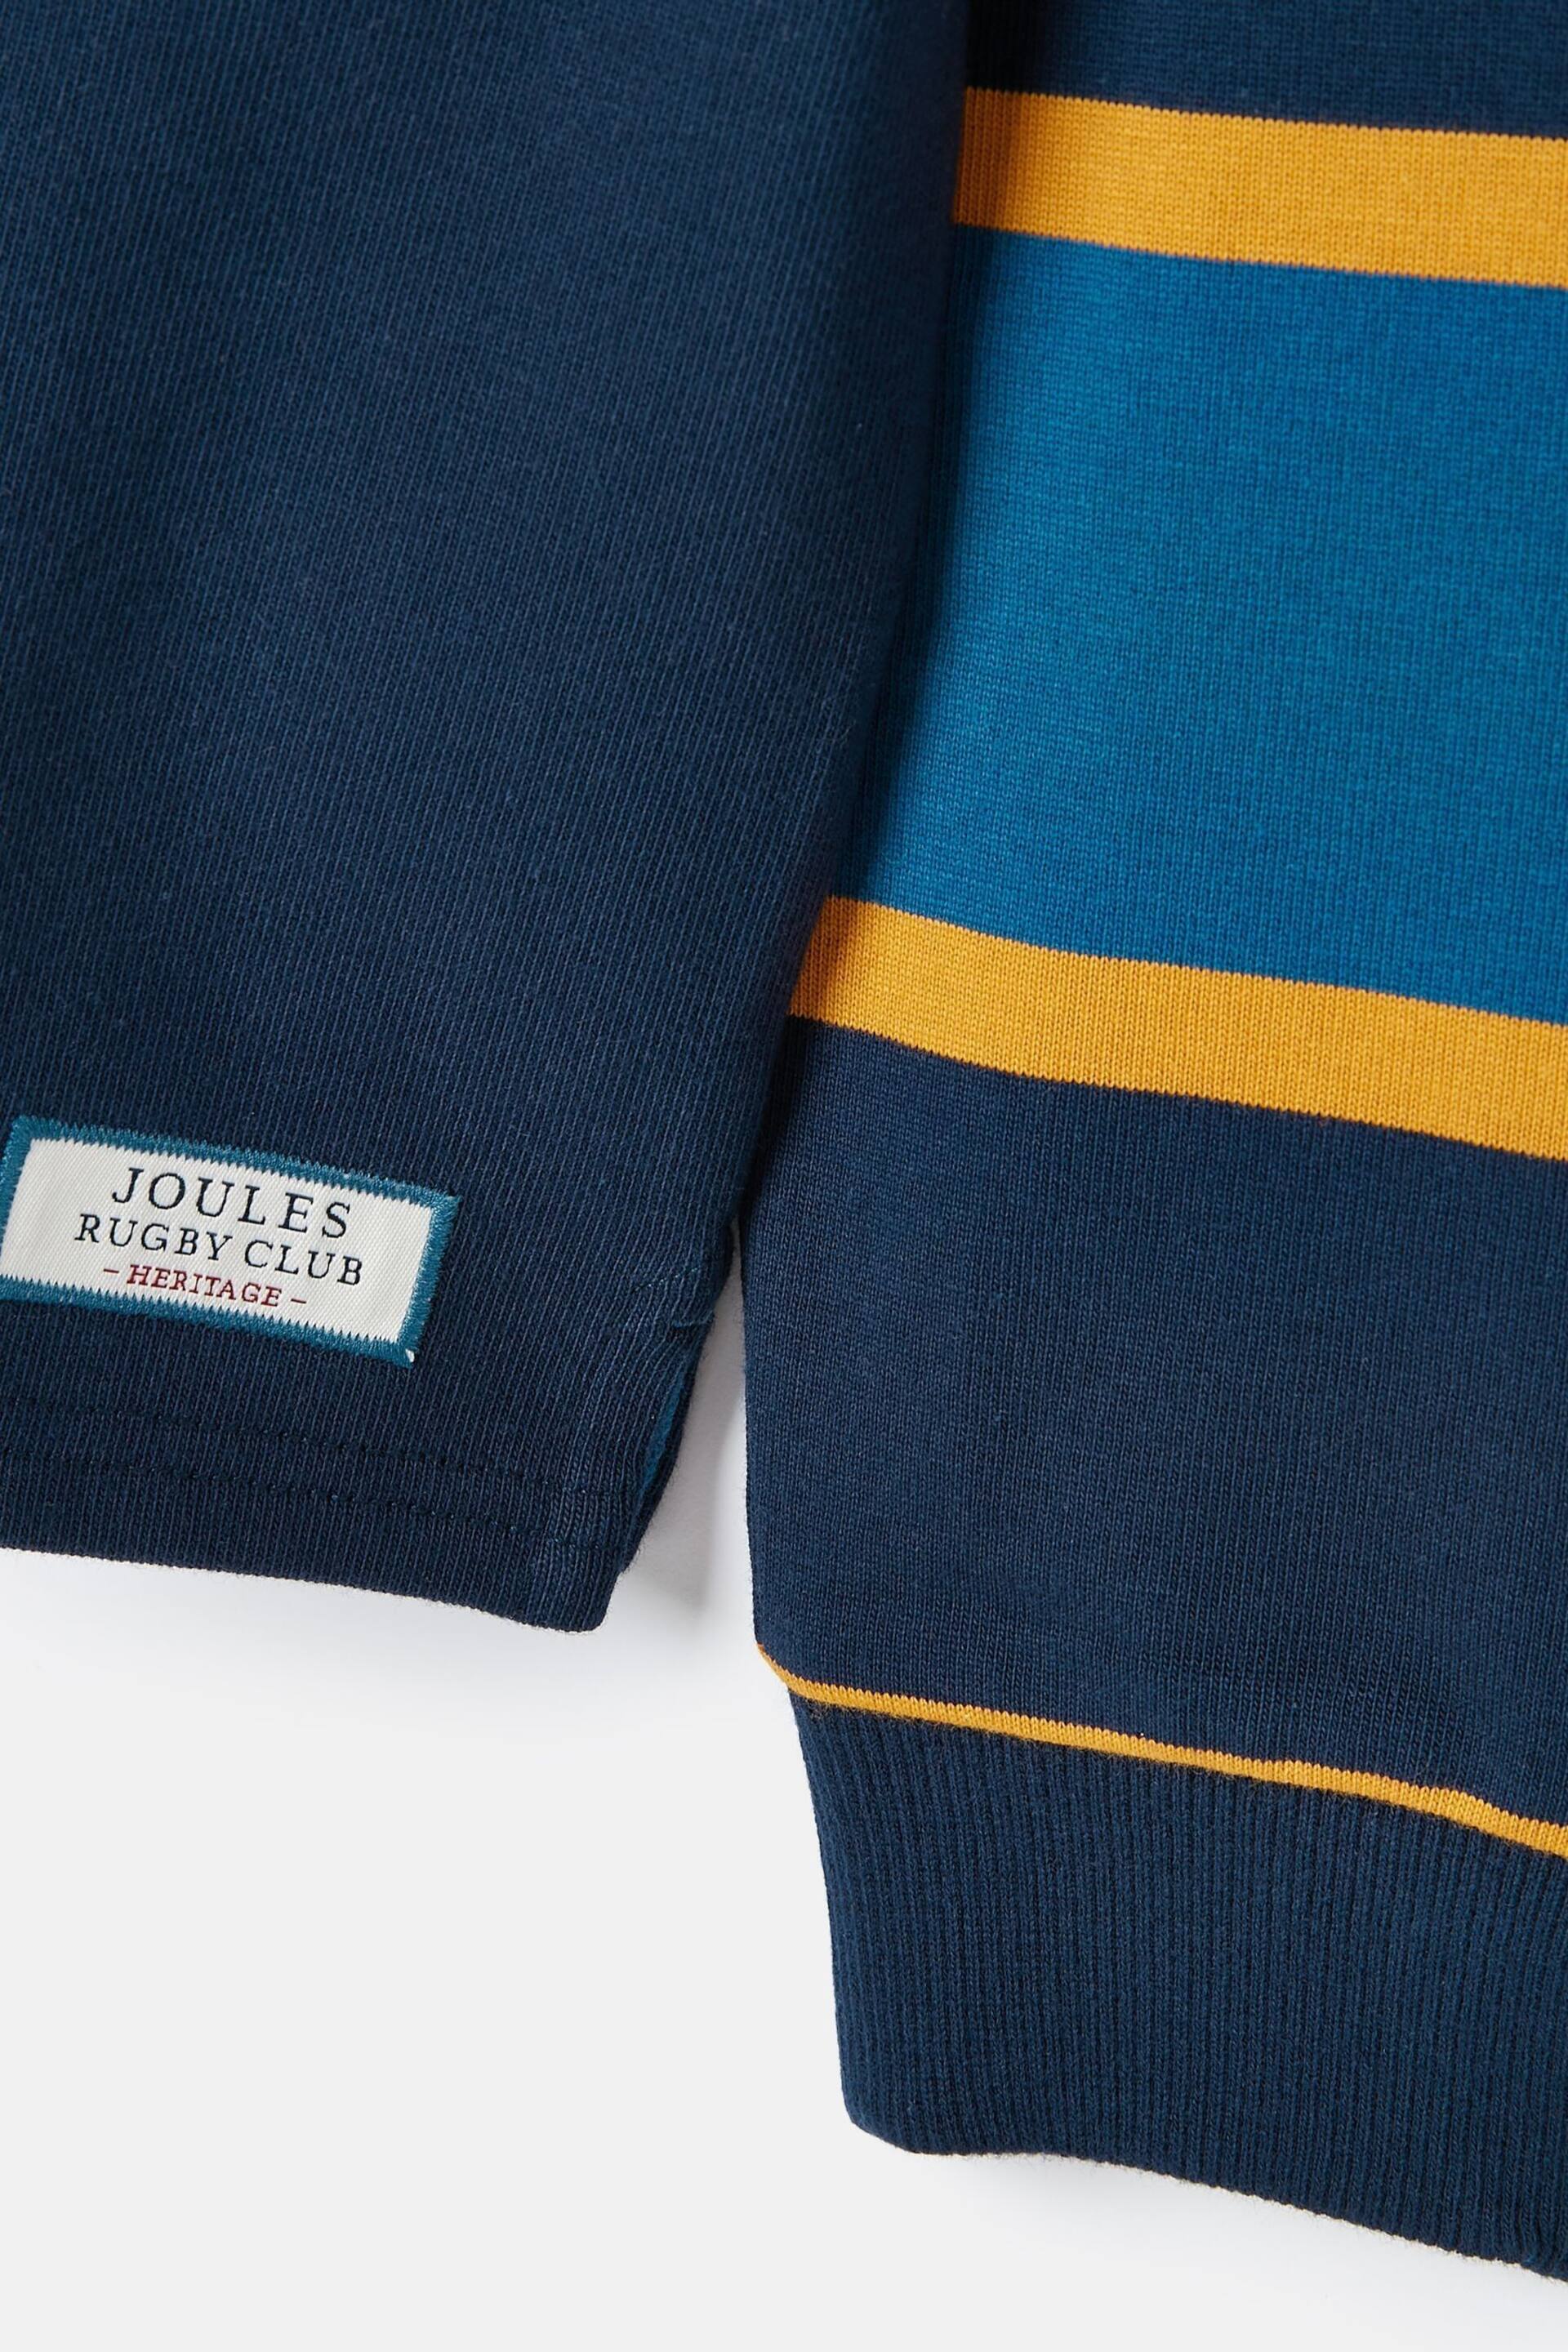 Joules Ellis Navy Quarter Zip Rugby Sweatshirt - Image 12 of 13